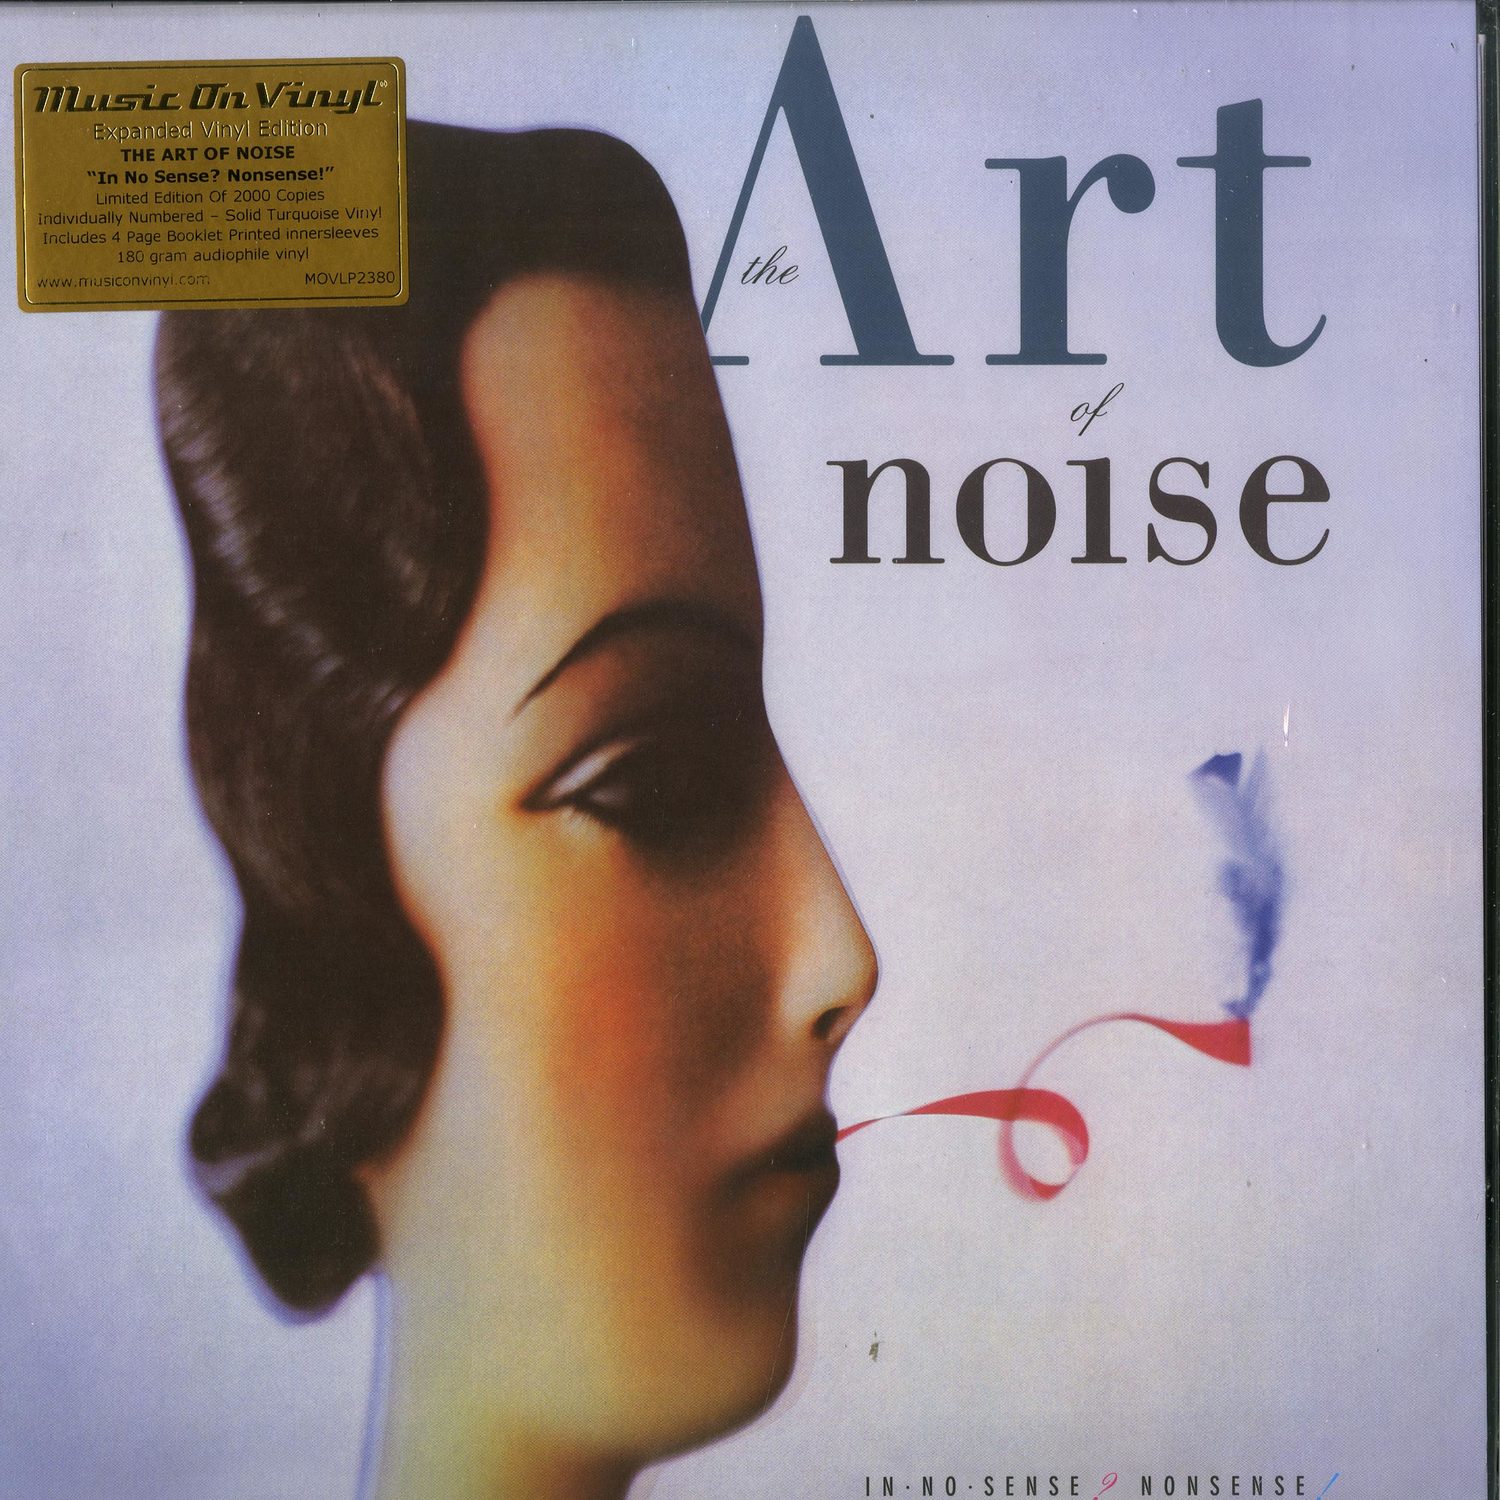 The Art Of Noise - IN NO SENSE? NONSENSE! 